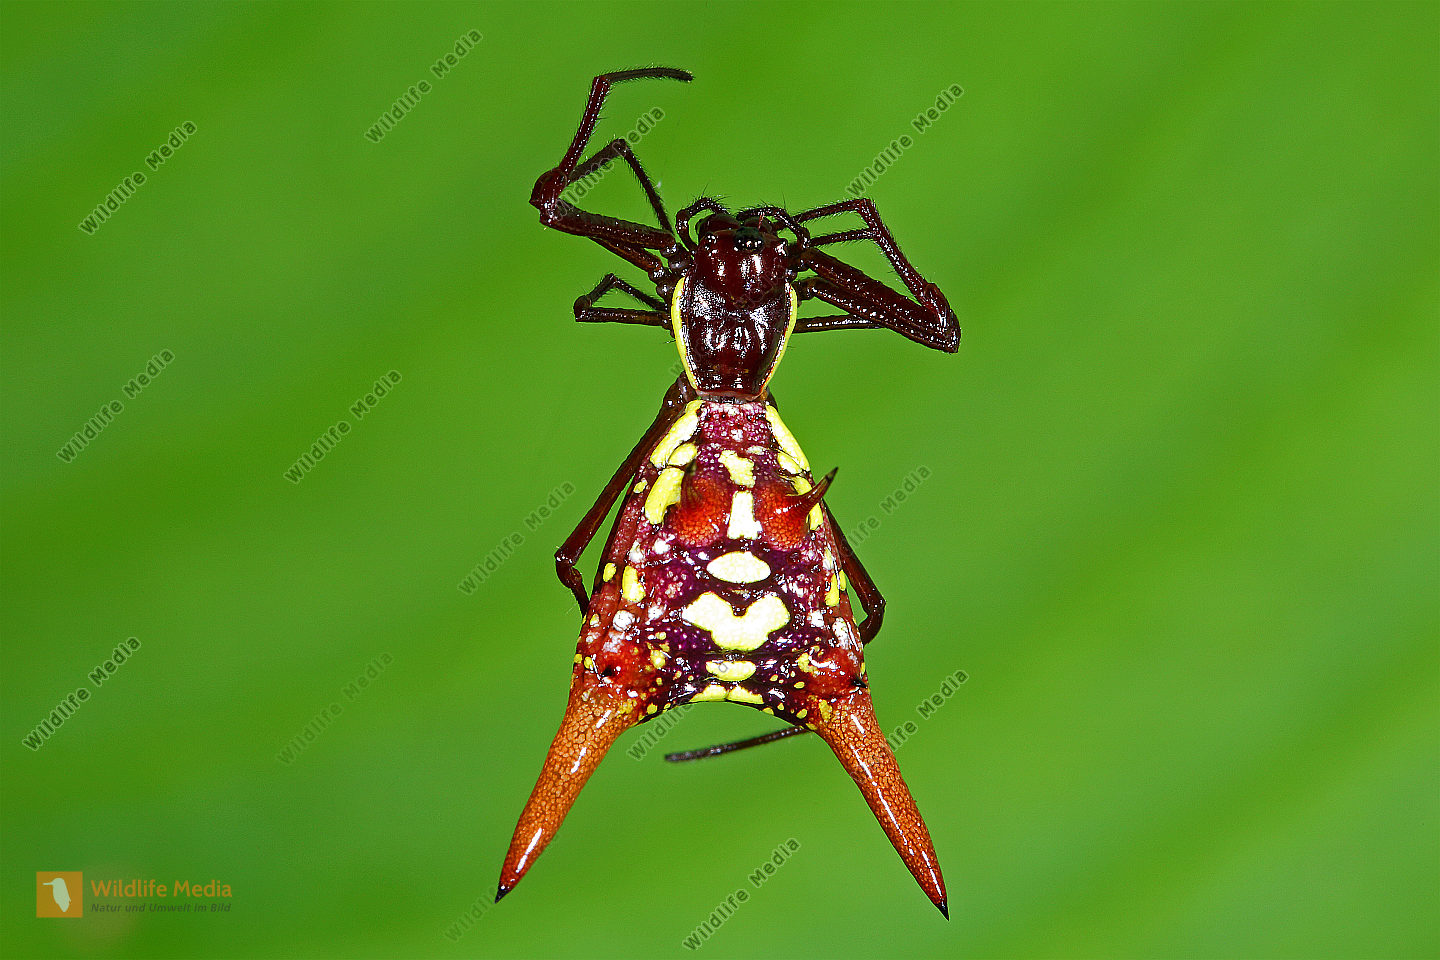 Radnetzspinne Costa Rica sexspinosa